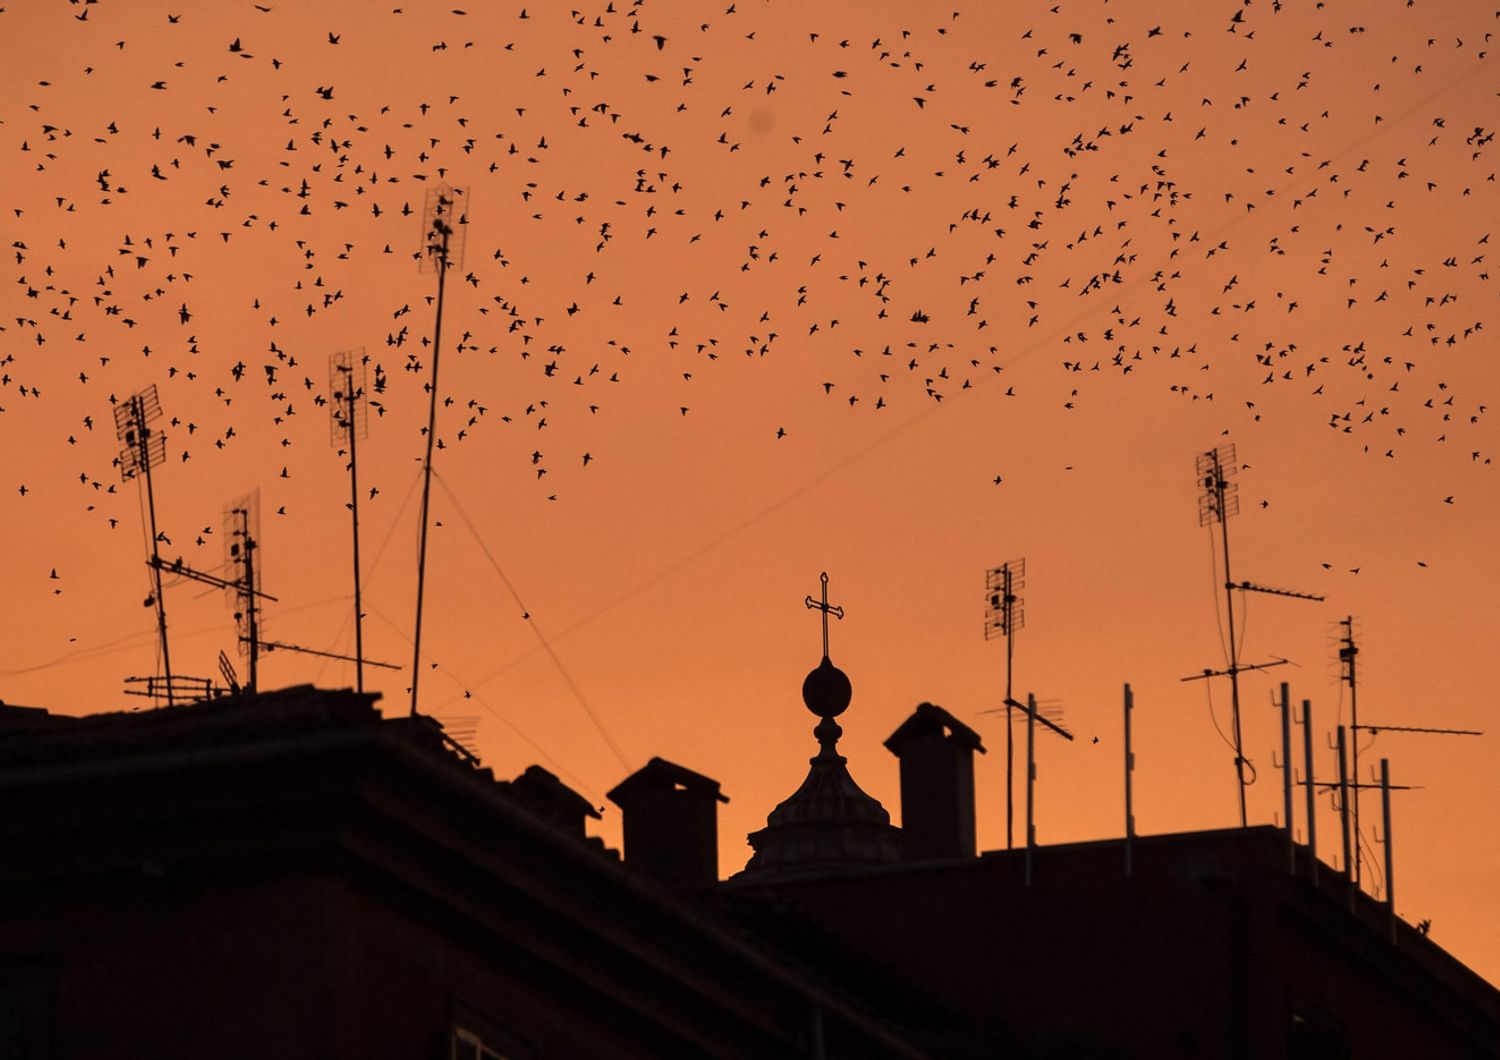 Roma, stormi di uccelli sui tetti (Agf)